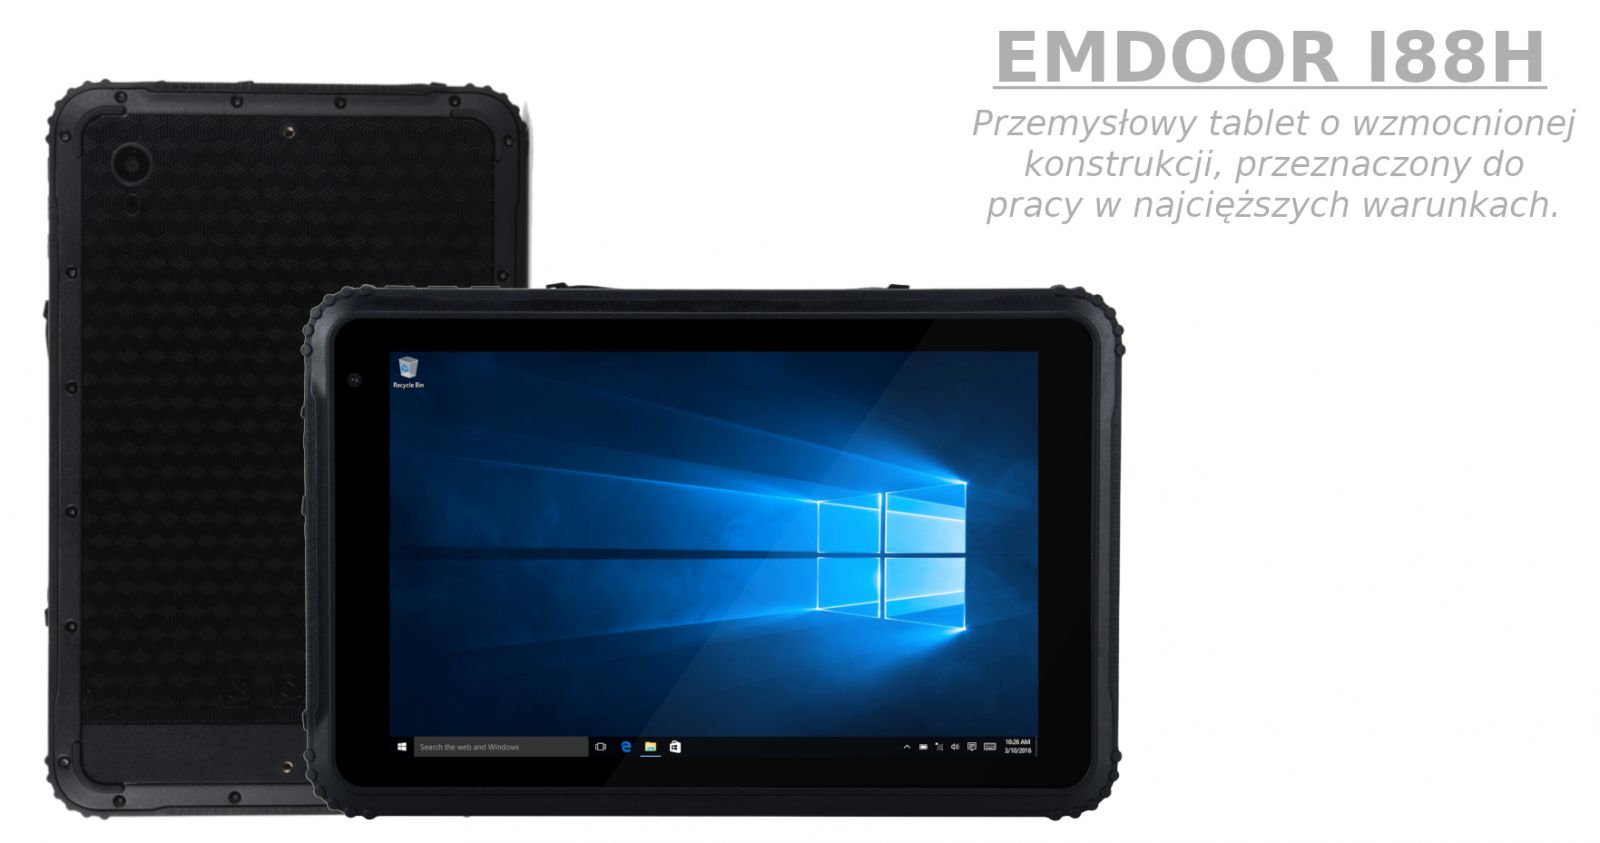 Emdoor I88H v.1 - Industrial 8-inch tablet with IP67 + MIL-STD-810G, Bluetooth, 4G module, 4GB RAM, 64GB ROM drive and Intel processor